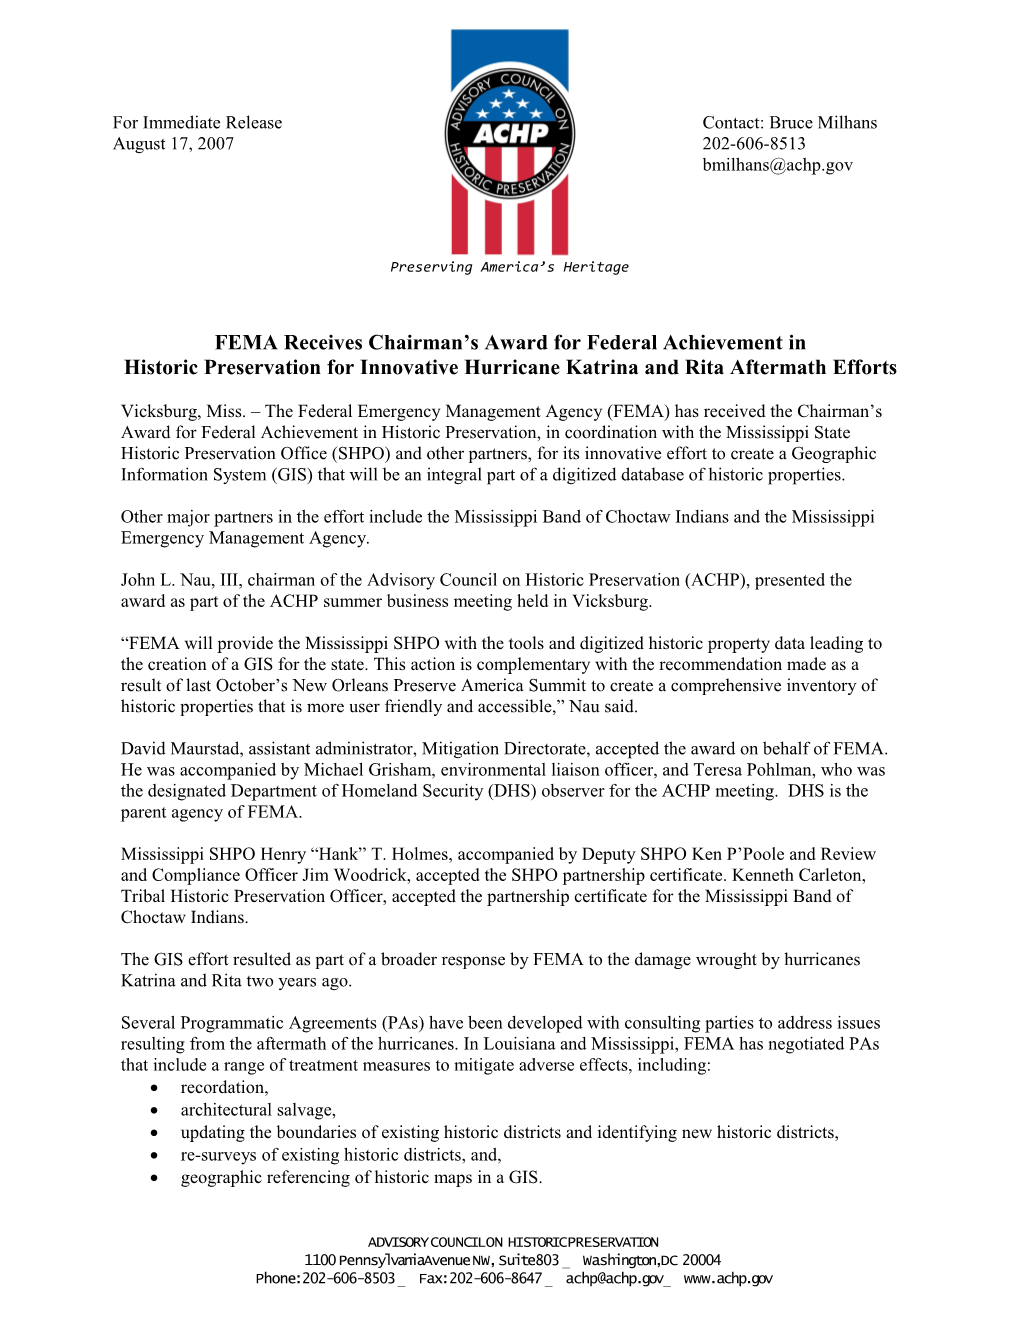 FEMA Receives Chairman S Award for Federal Achievement In